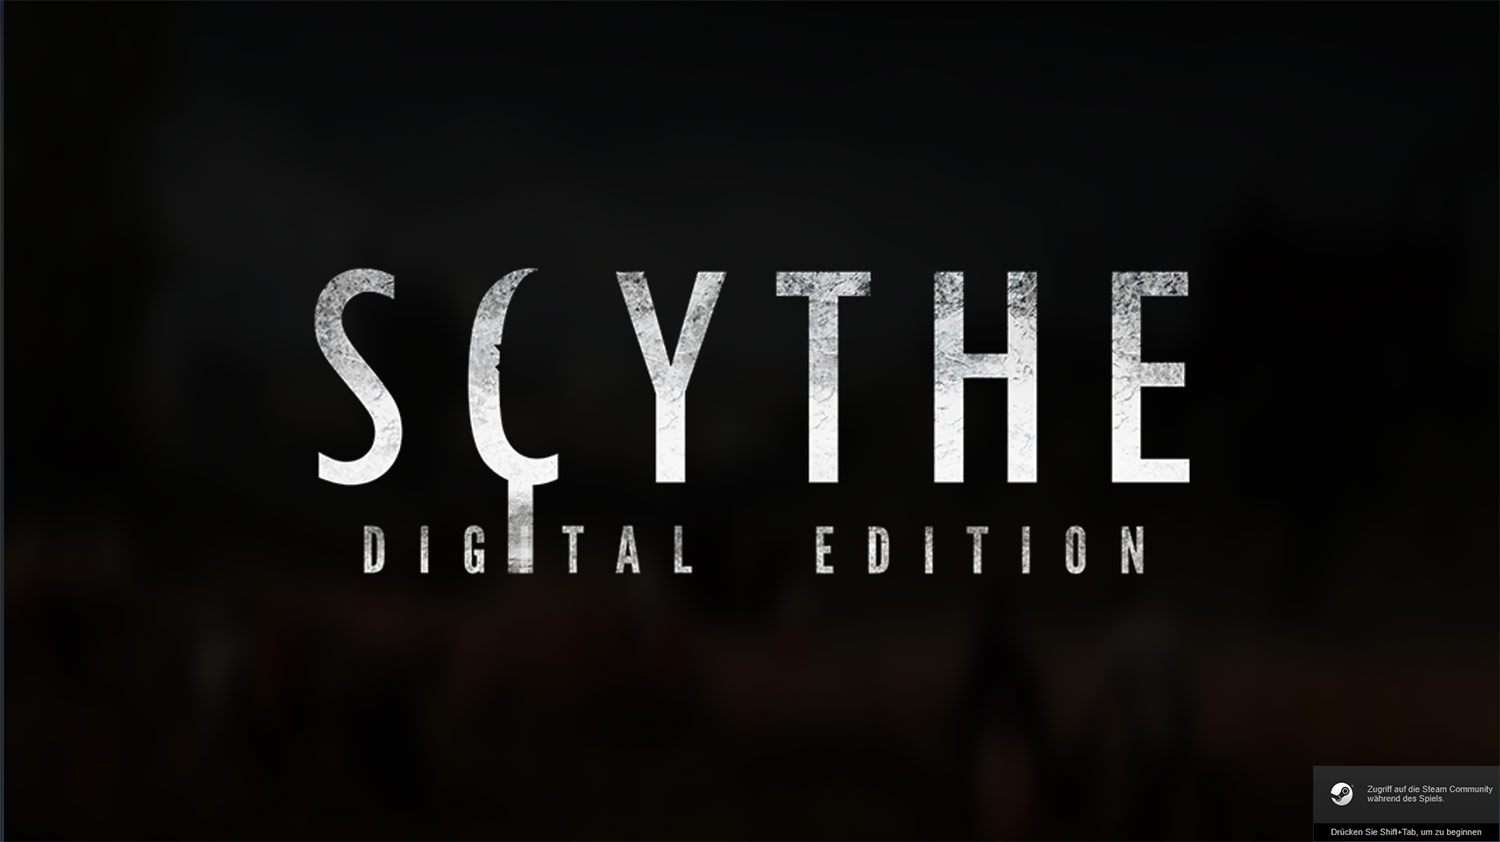 Scythe Digitale Version – Großes Update